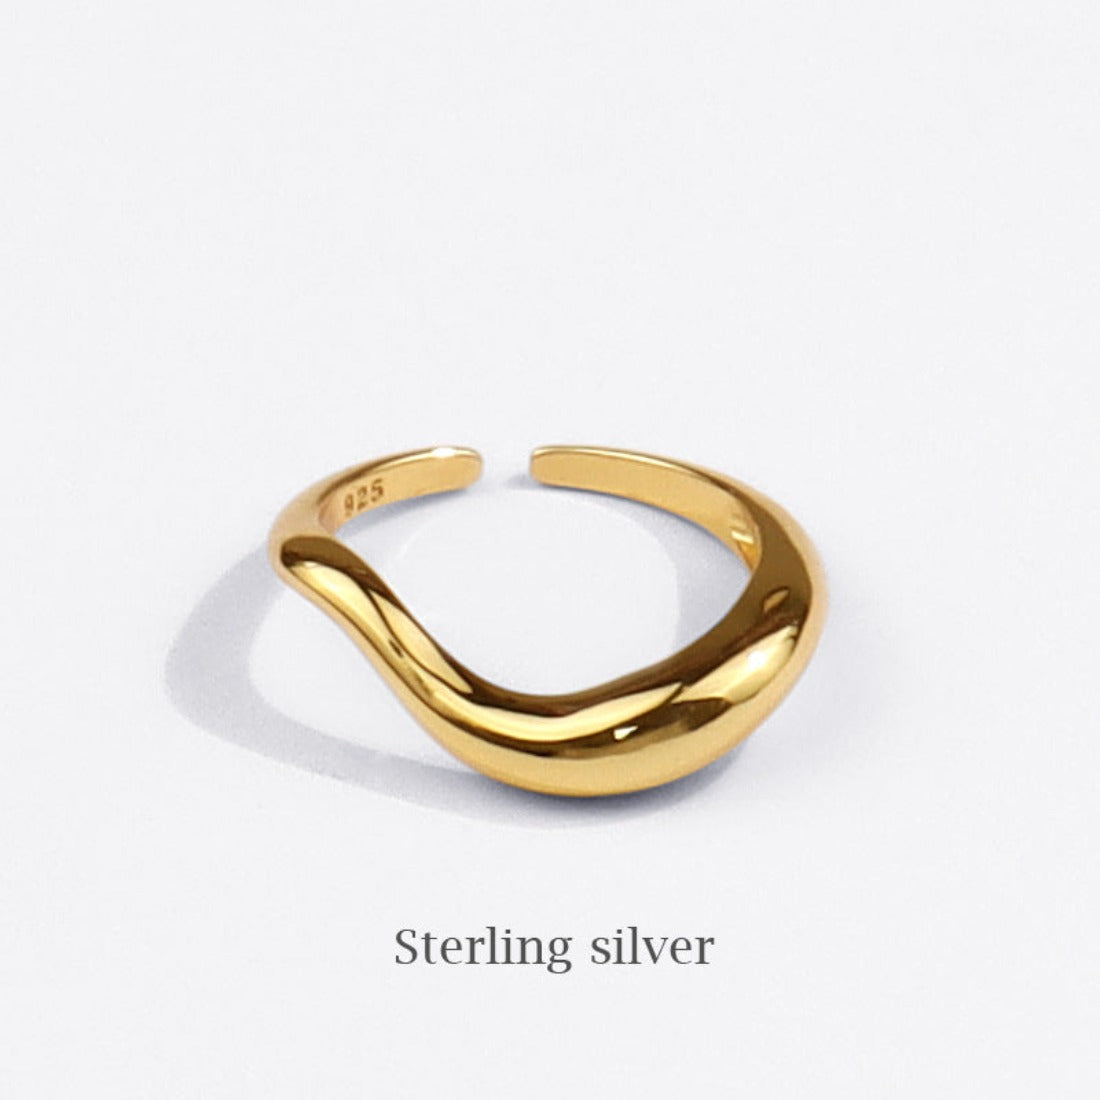 Chunky gold ring